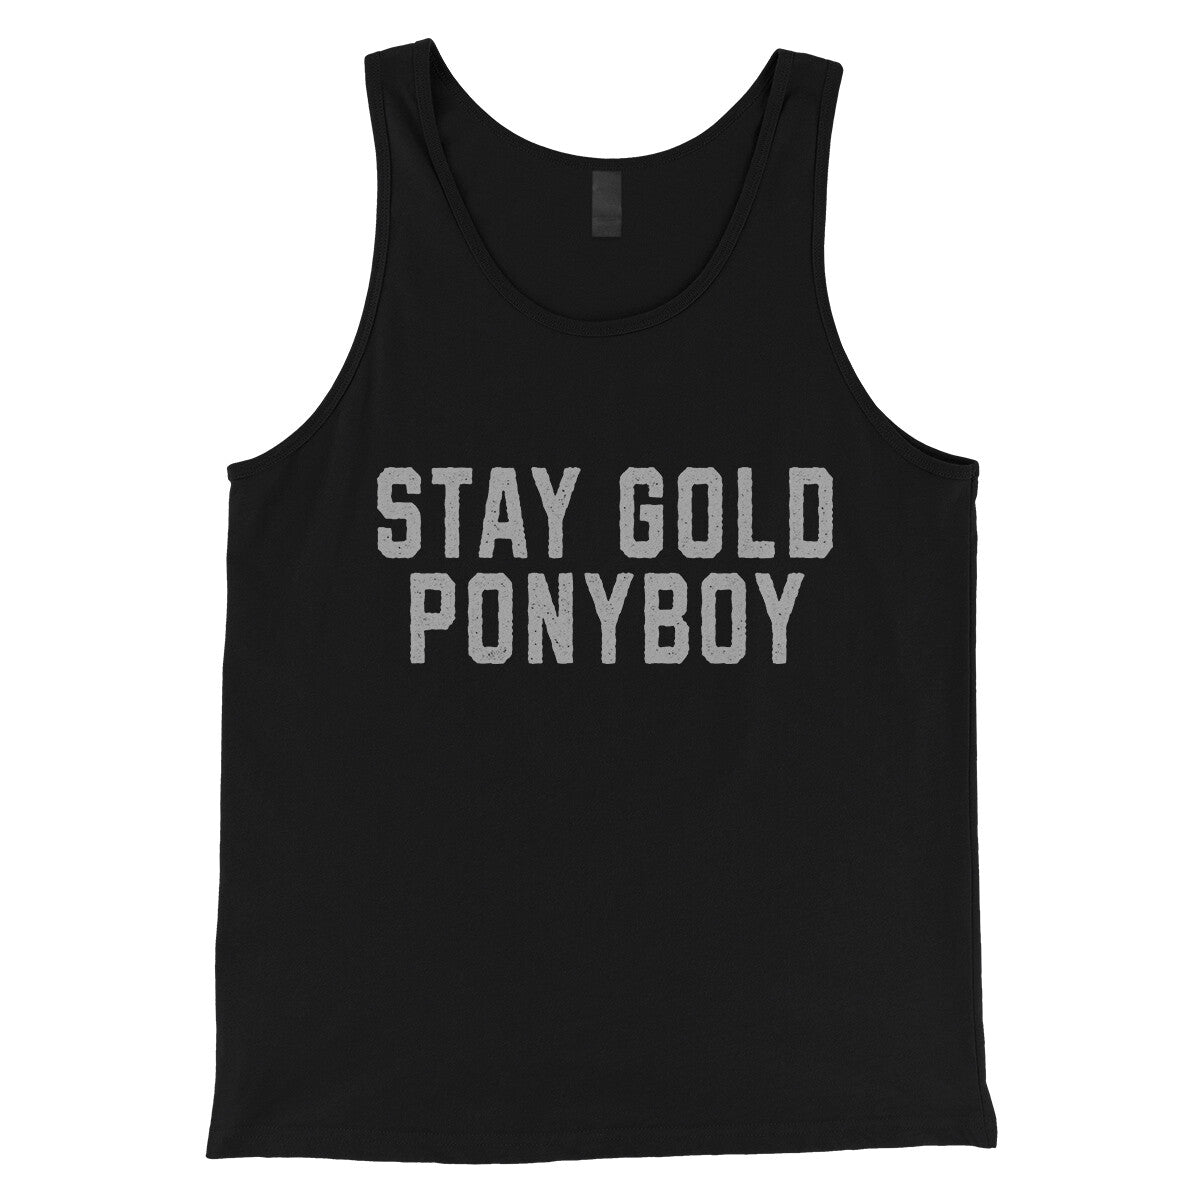 Stay Gold Ponyboy in Black Color